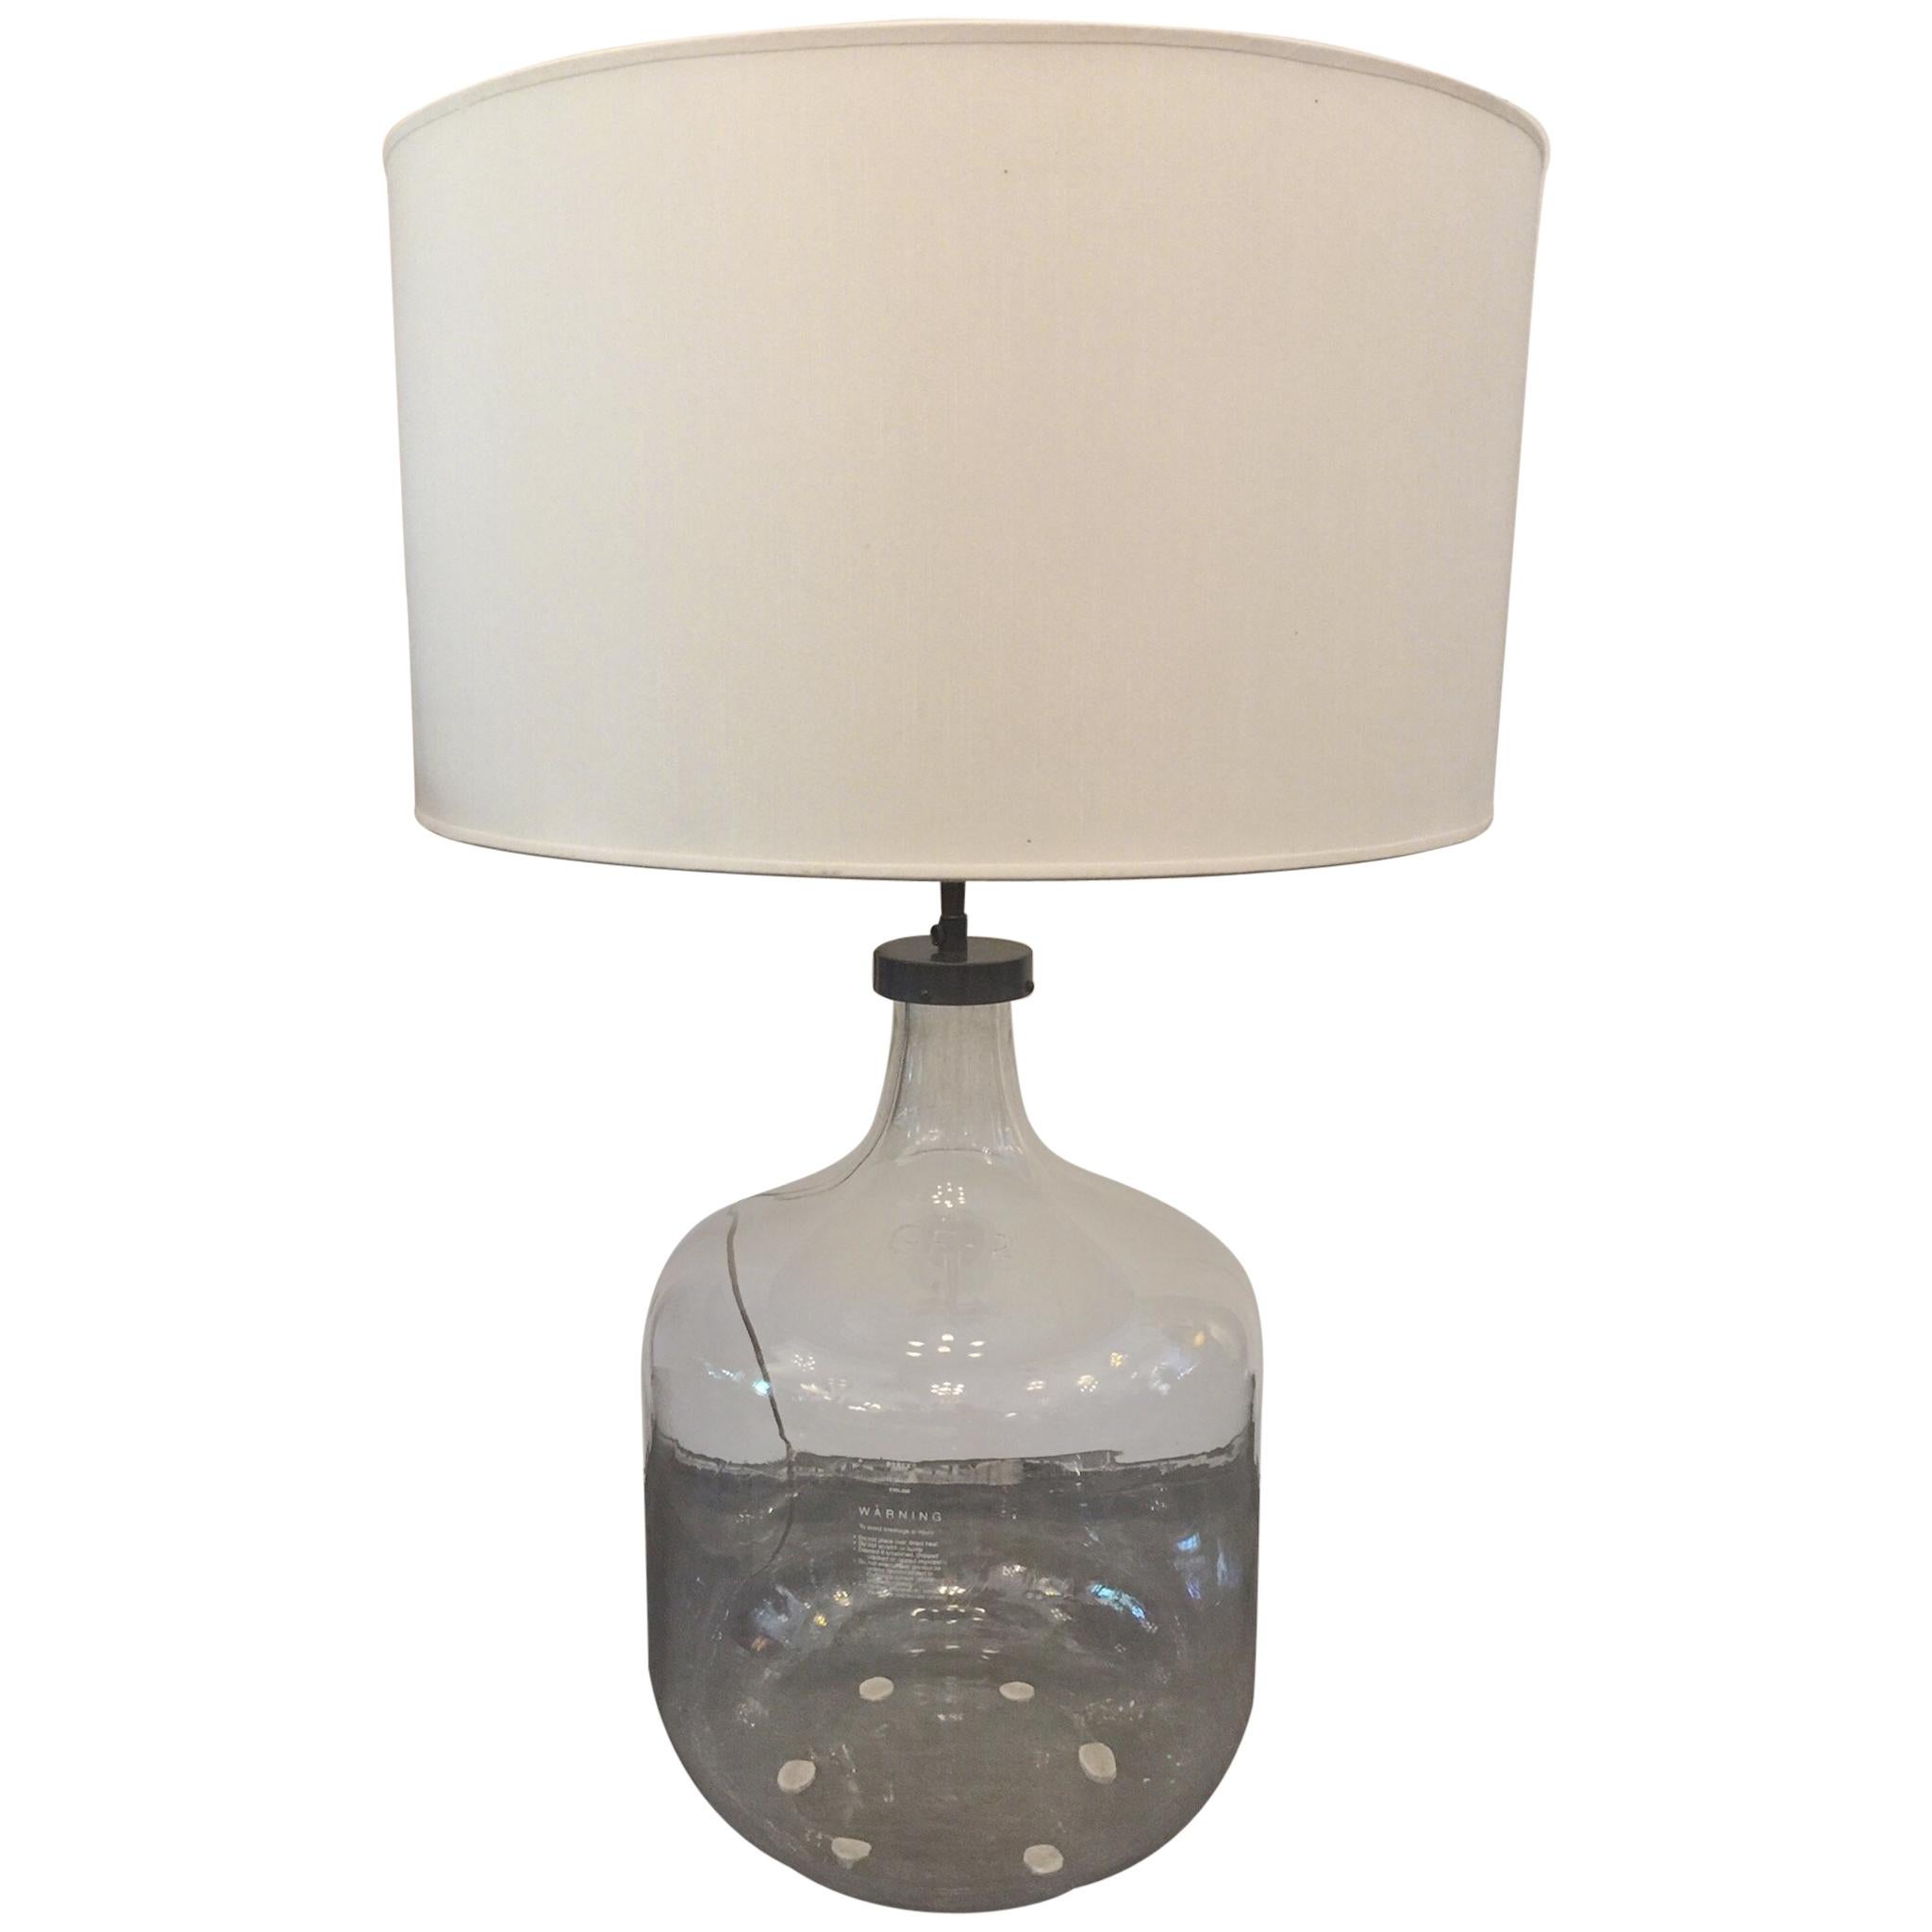 Super-Oversized Pyrex Laboratory Bottle Table Lamp